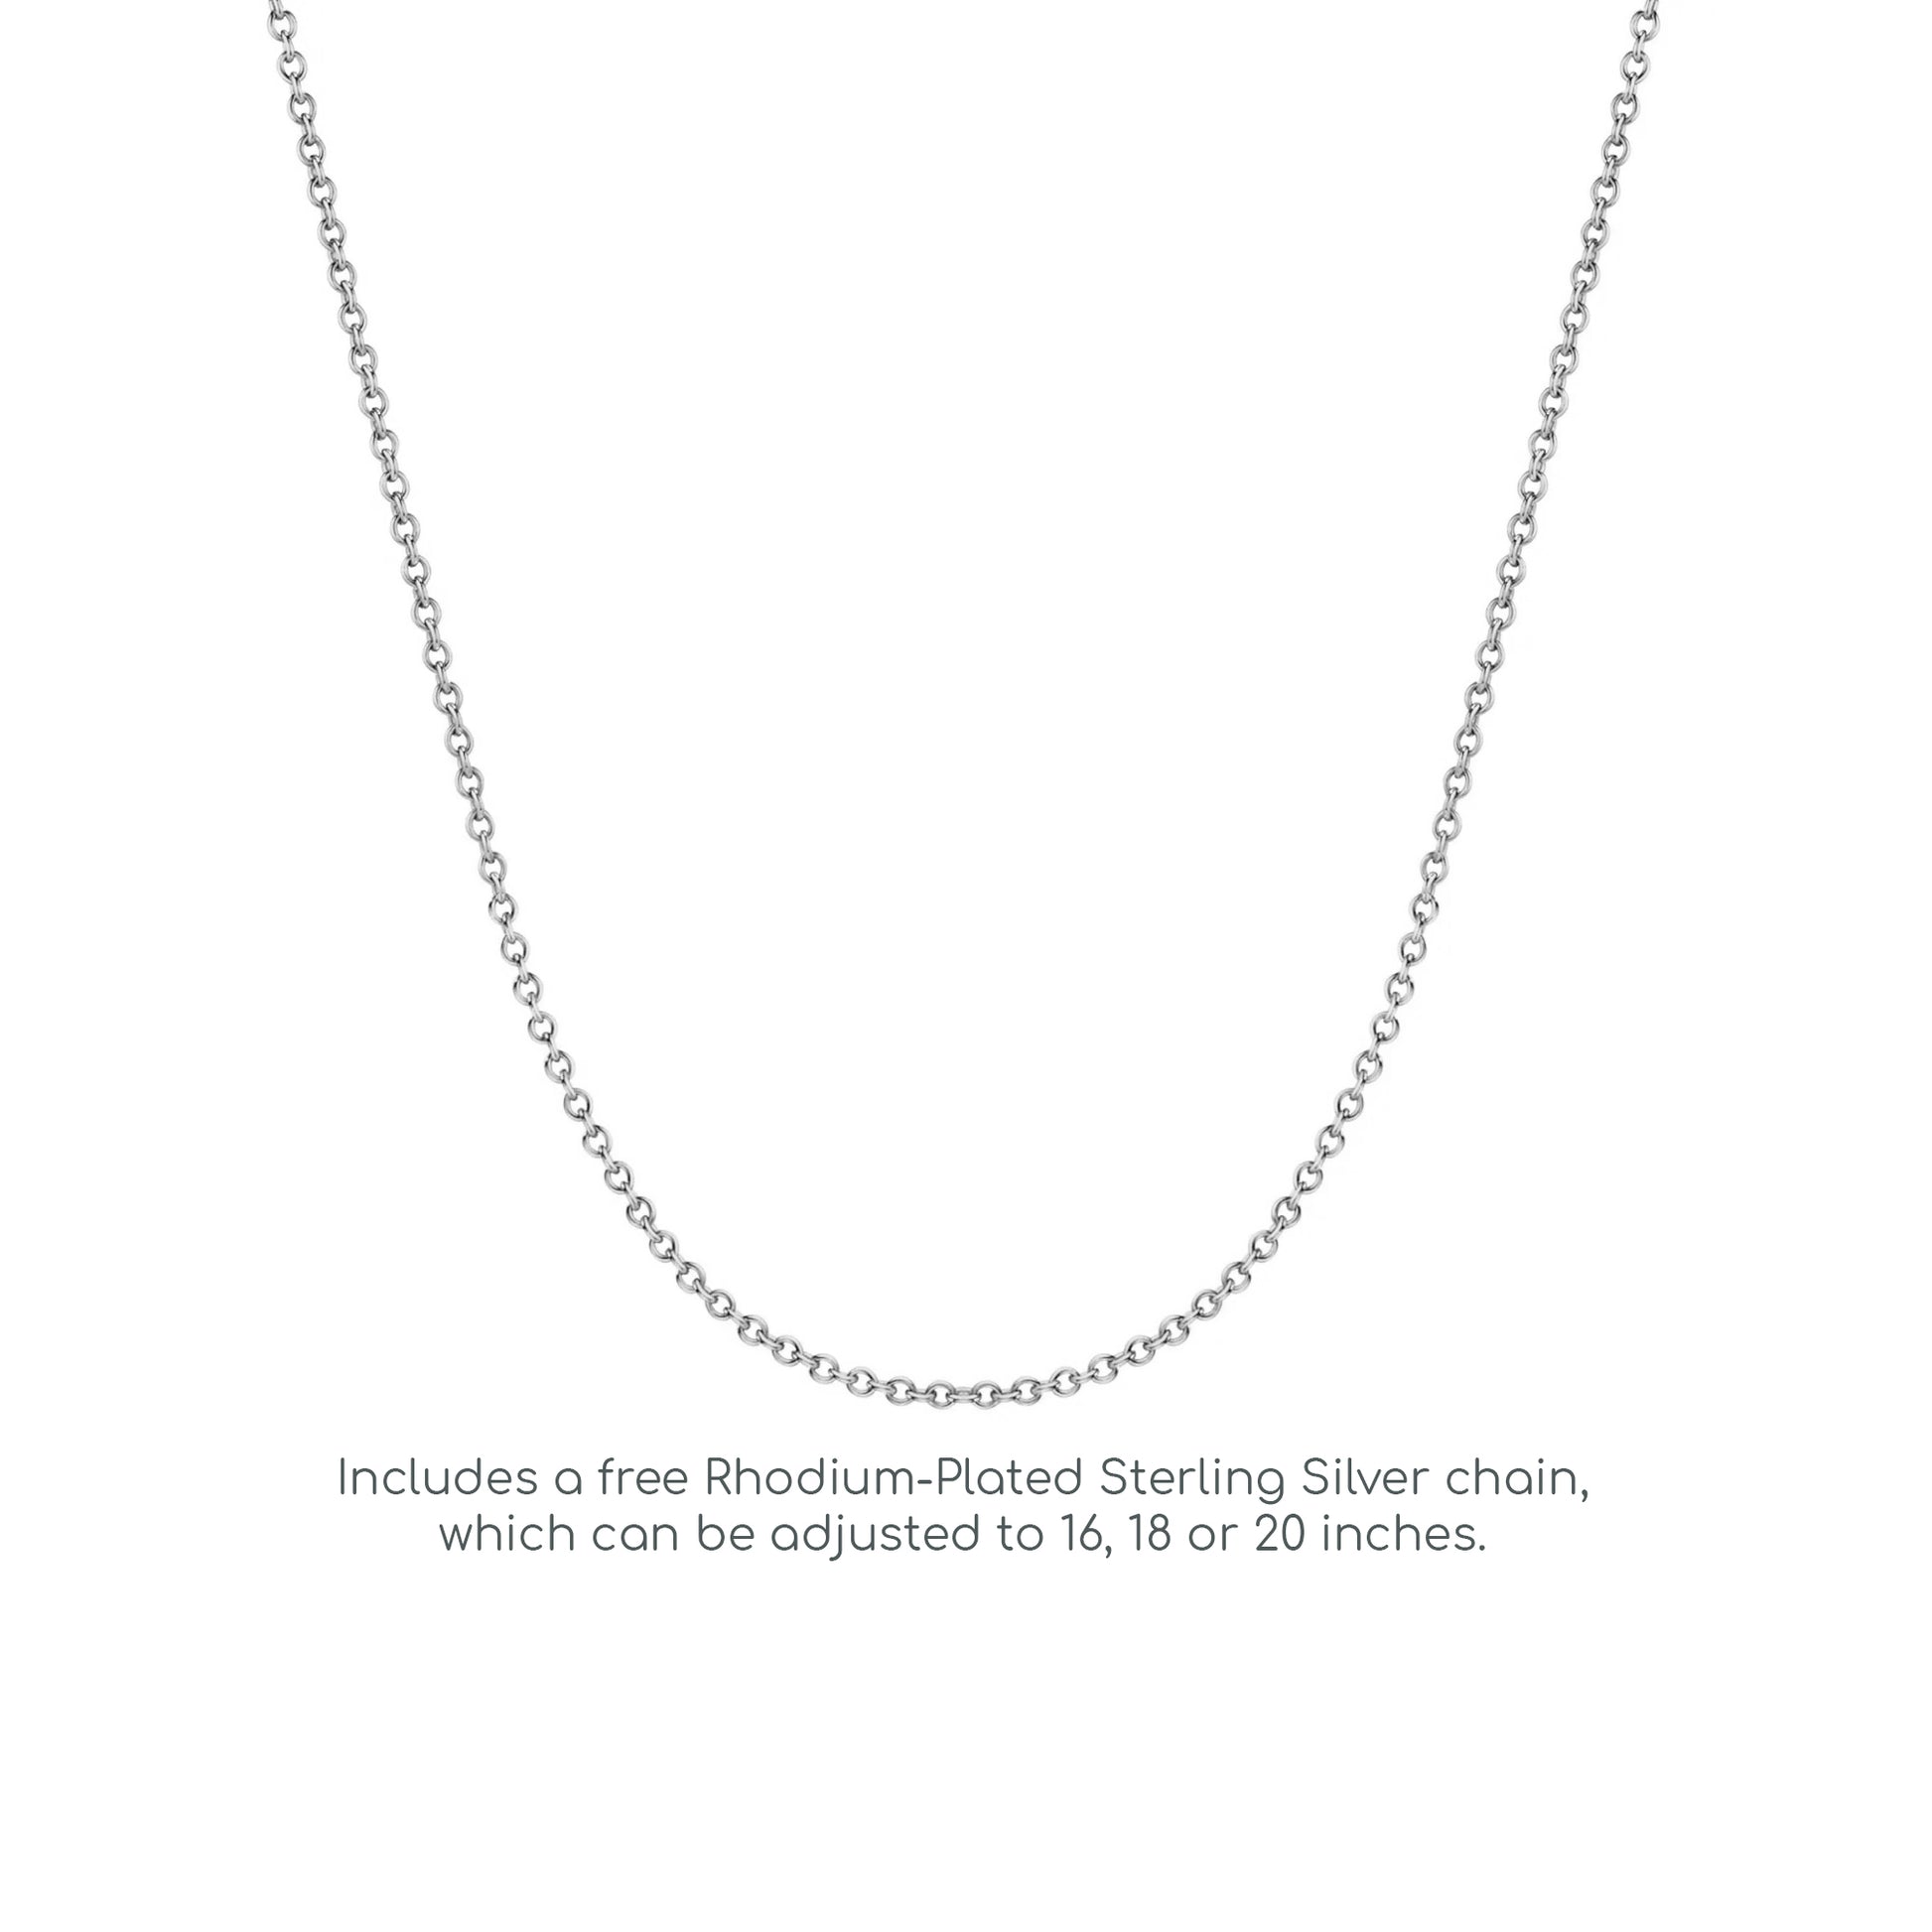 Silver  CZ Egyptian Collar Cluster Pendant Necklace 18 inch - GVP512